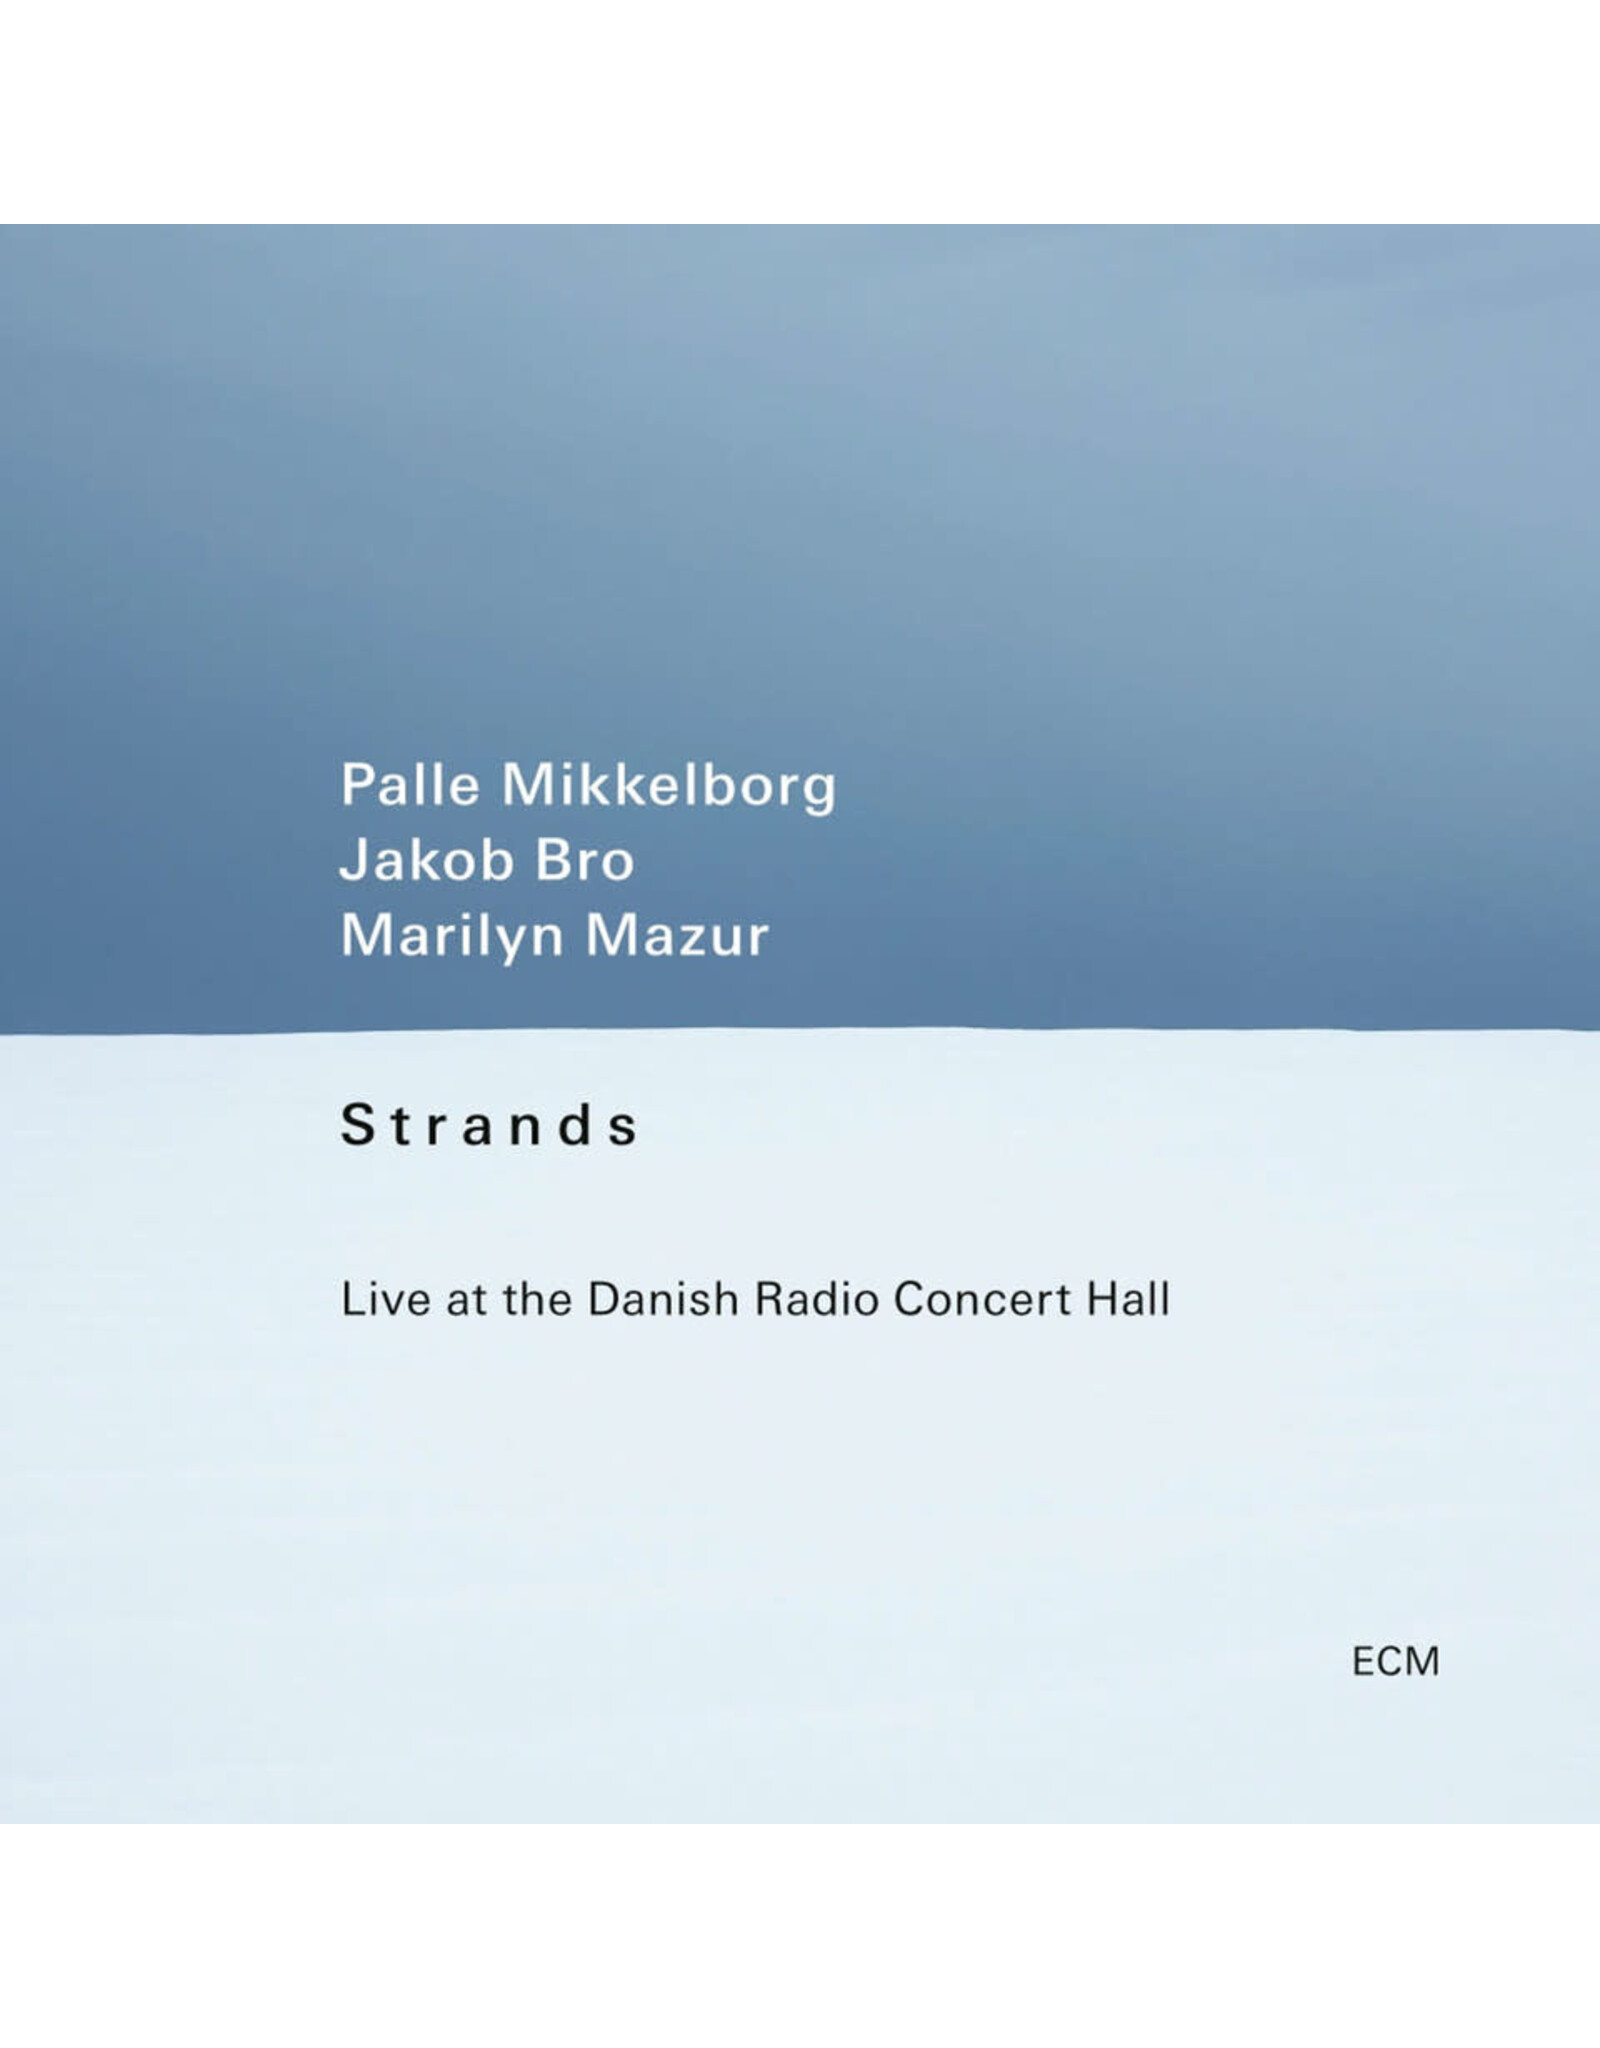 ECM Mikkelborg, Palle: Strands: Live at the Danish Radio Concert Hall (w/Jakob Bro, Marilyn Mazur) LP